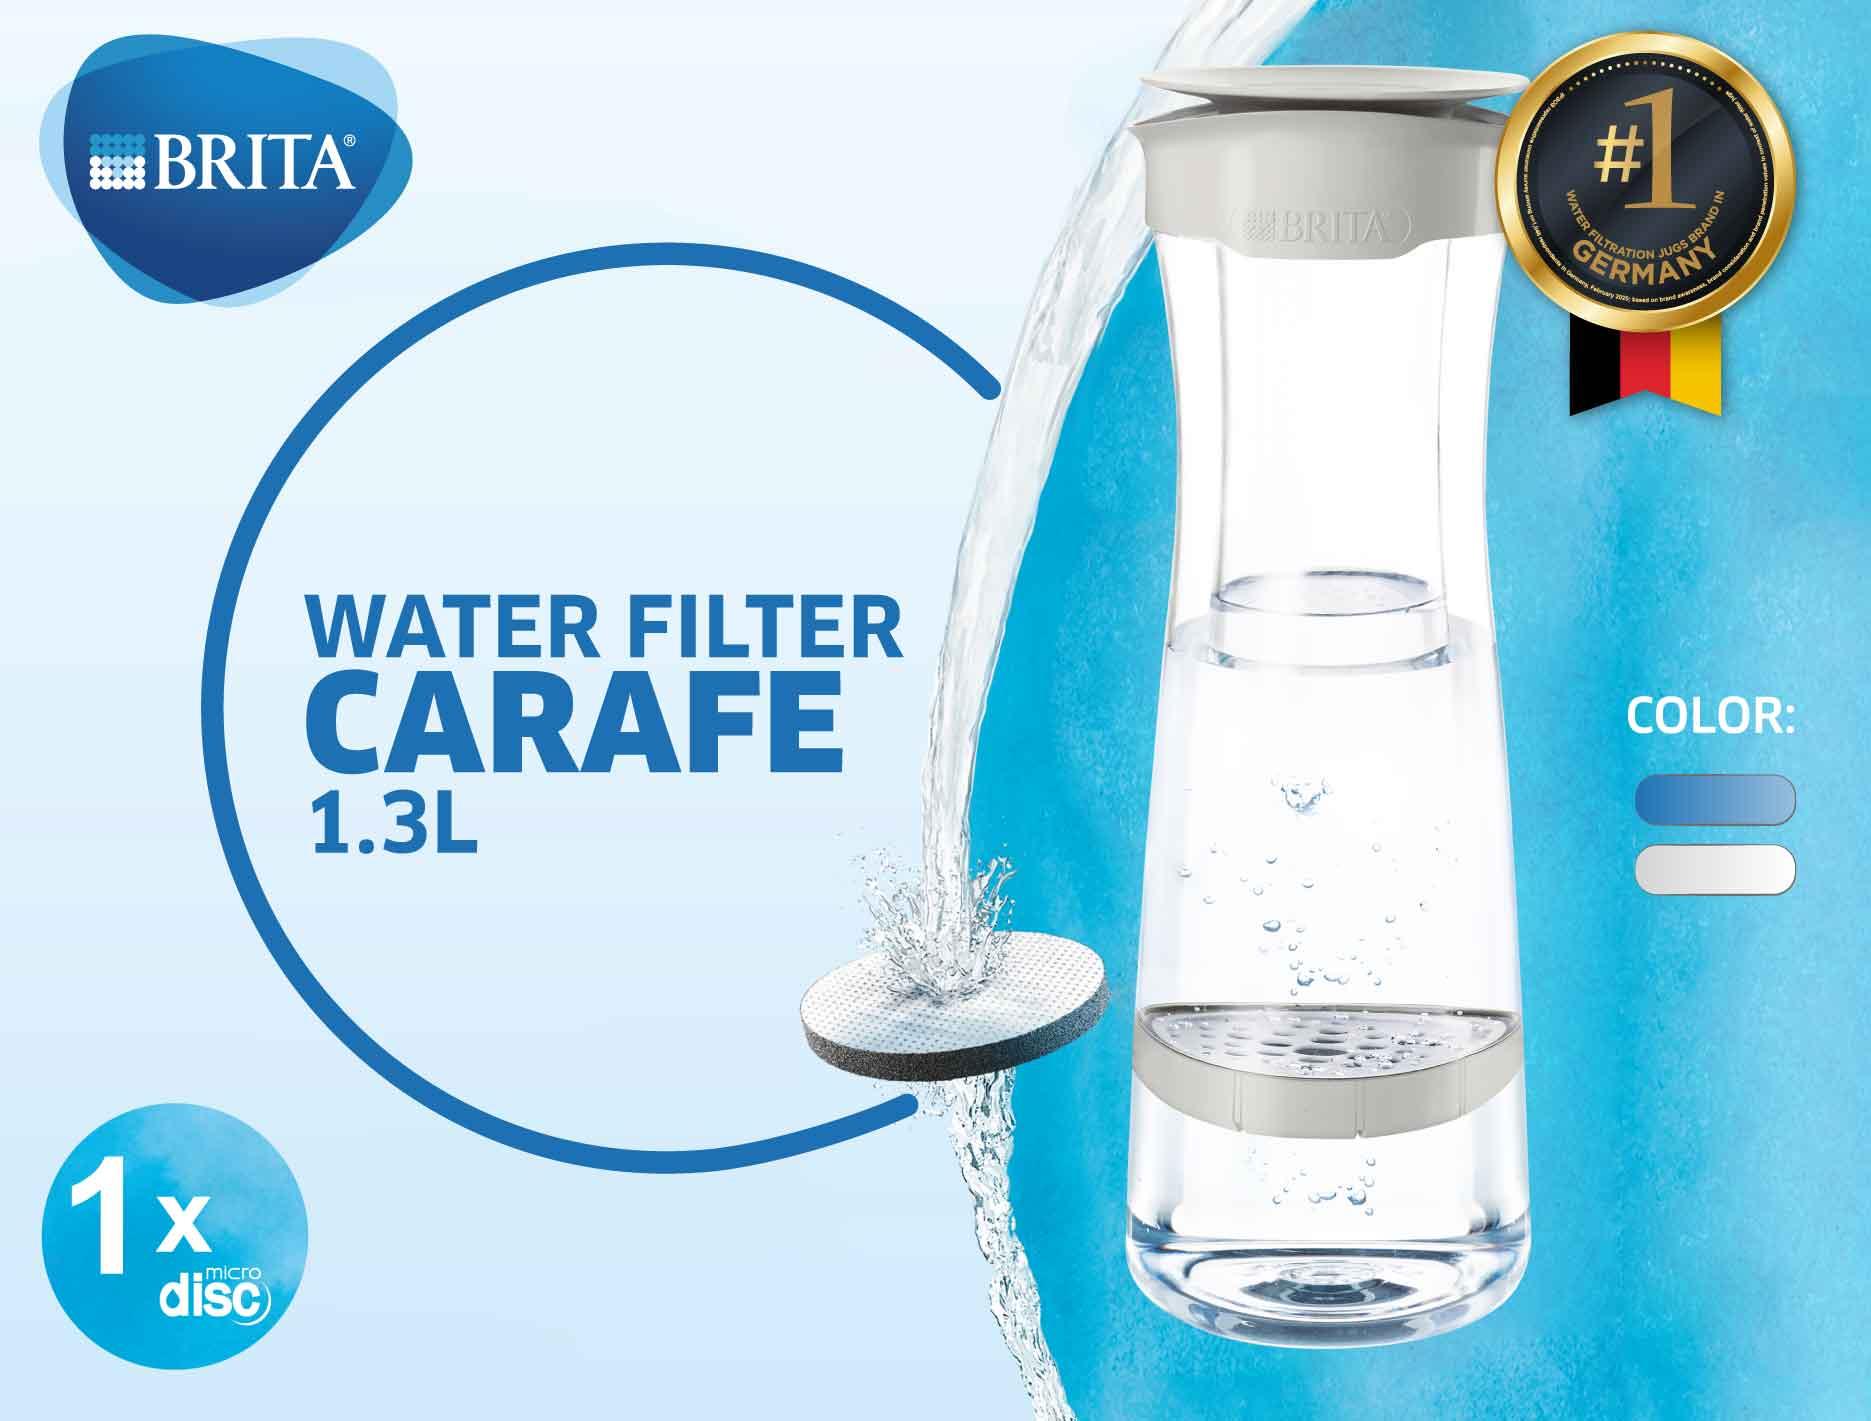 Discover the BRITA Water Filter Carafe 